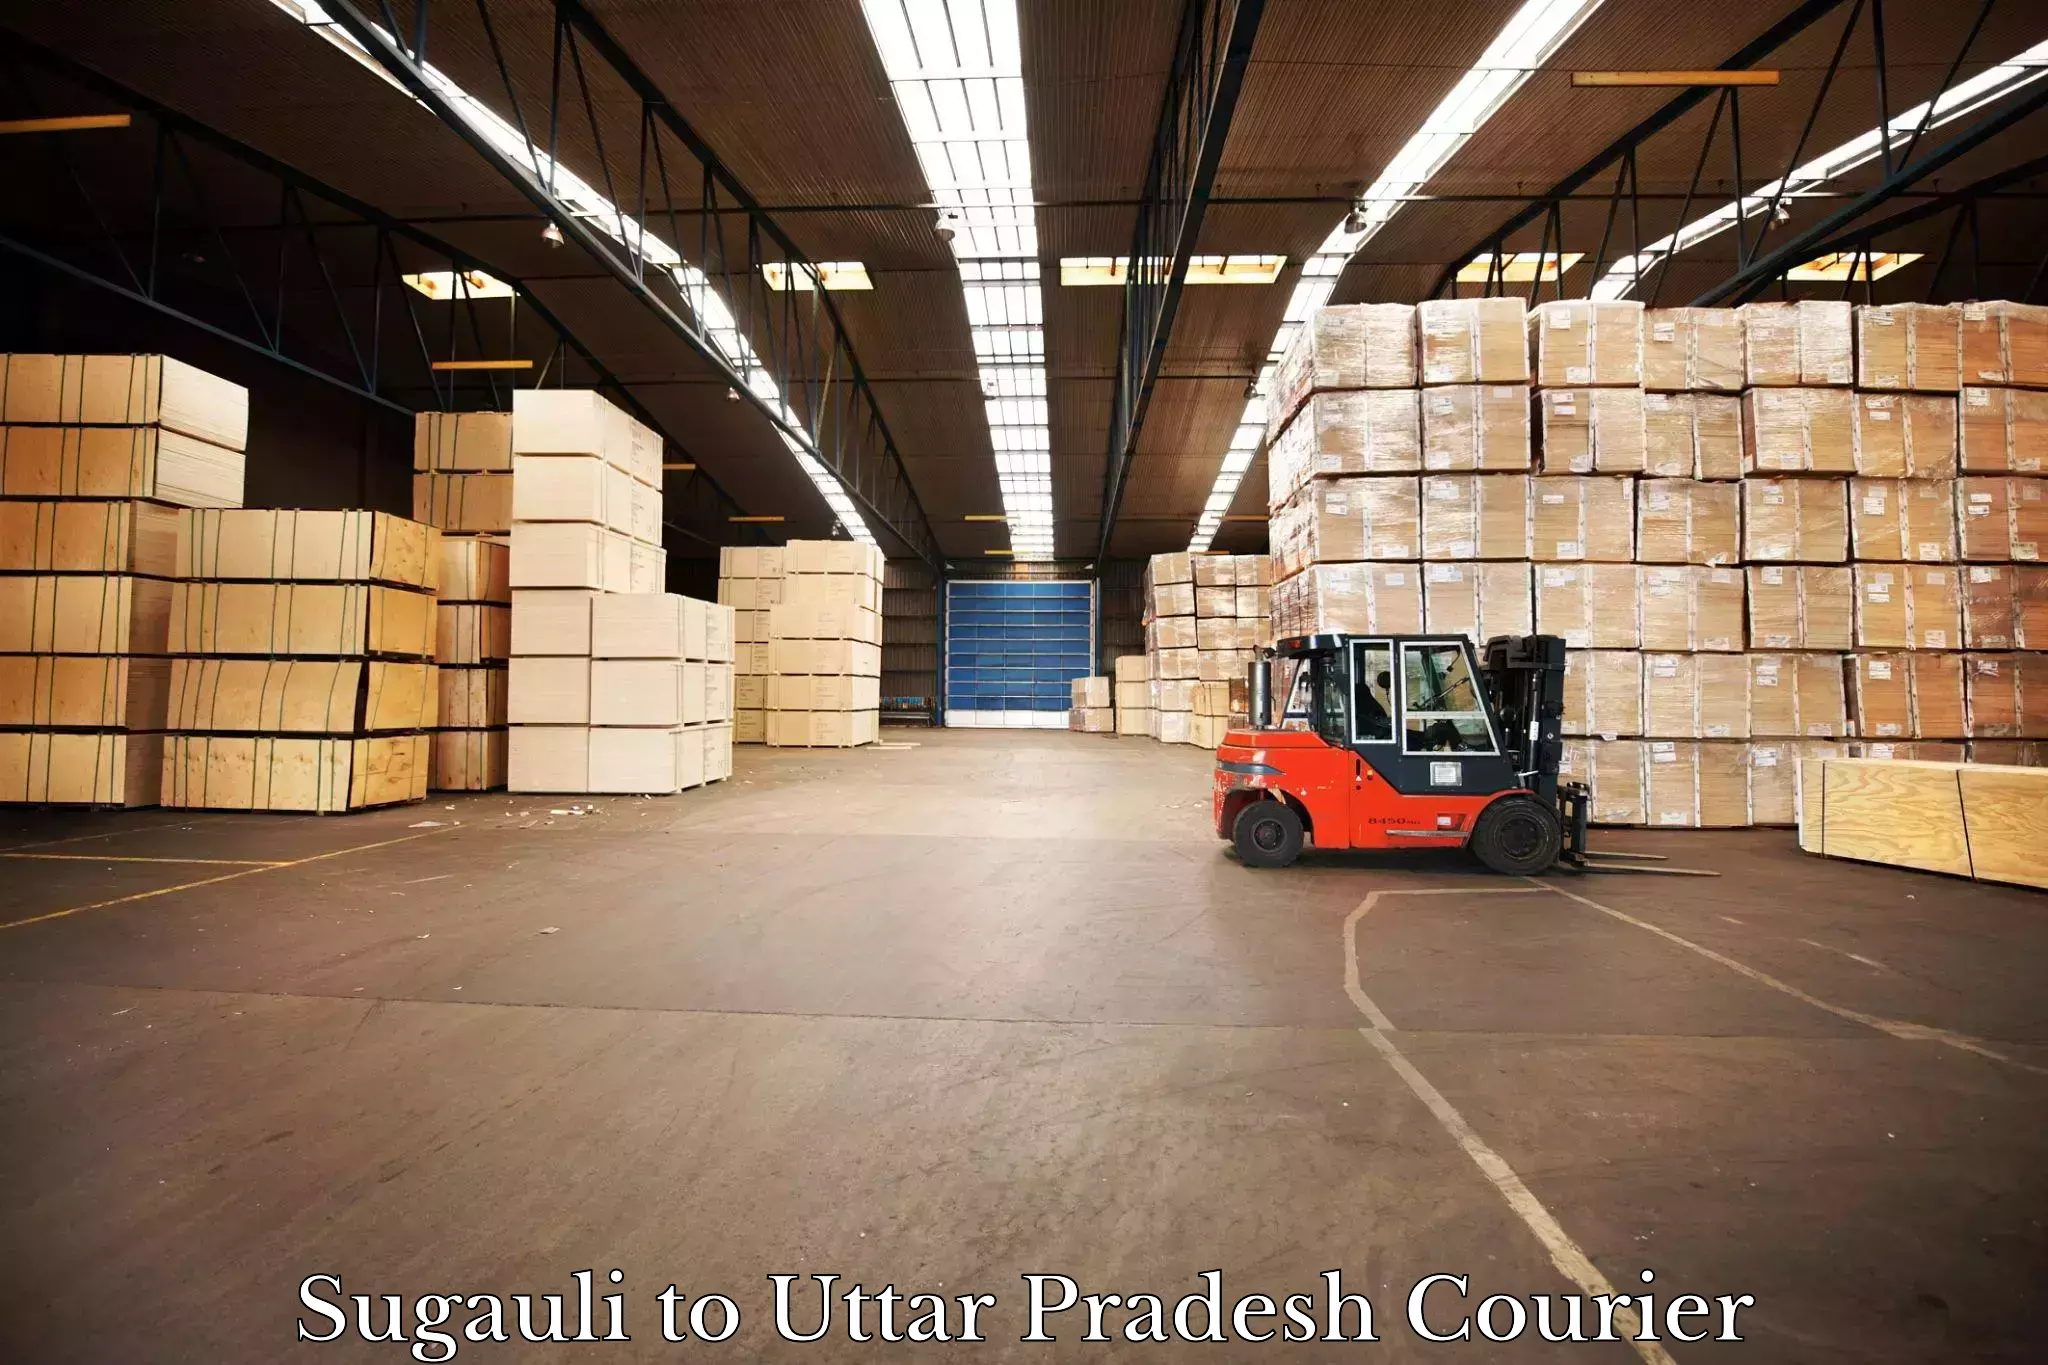 Express delivery capabilities in Sugauli to Varanasi